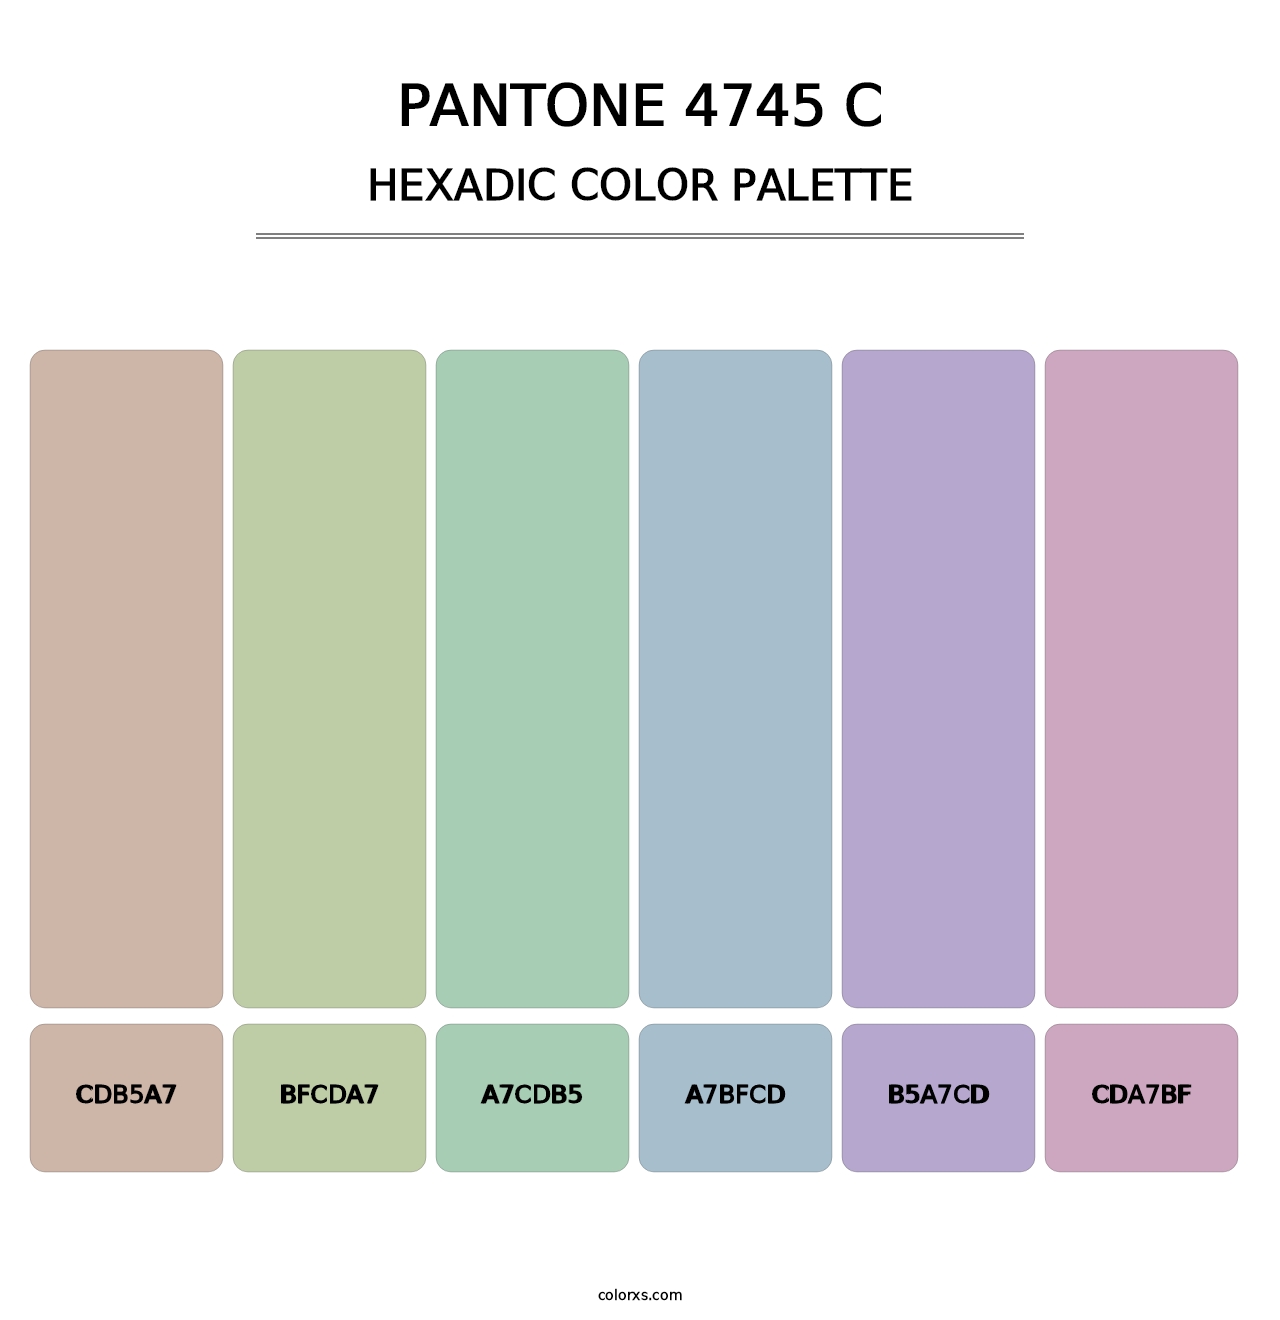 PANTONE 4745 C - Hexadic Color Palette